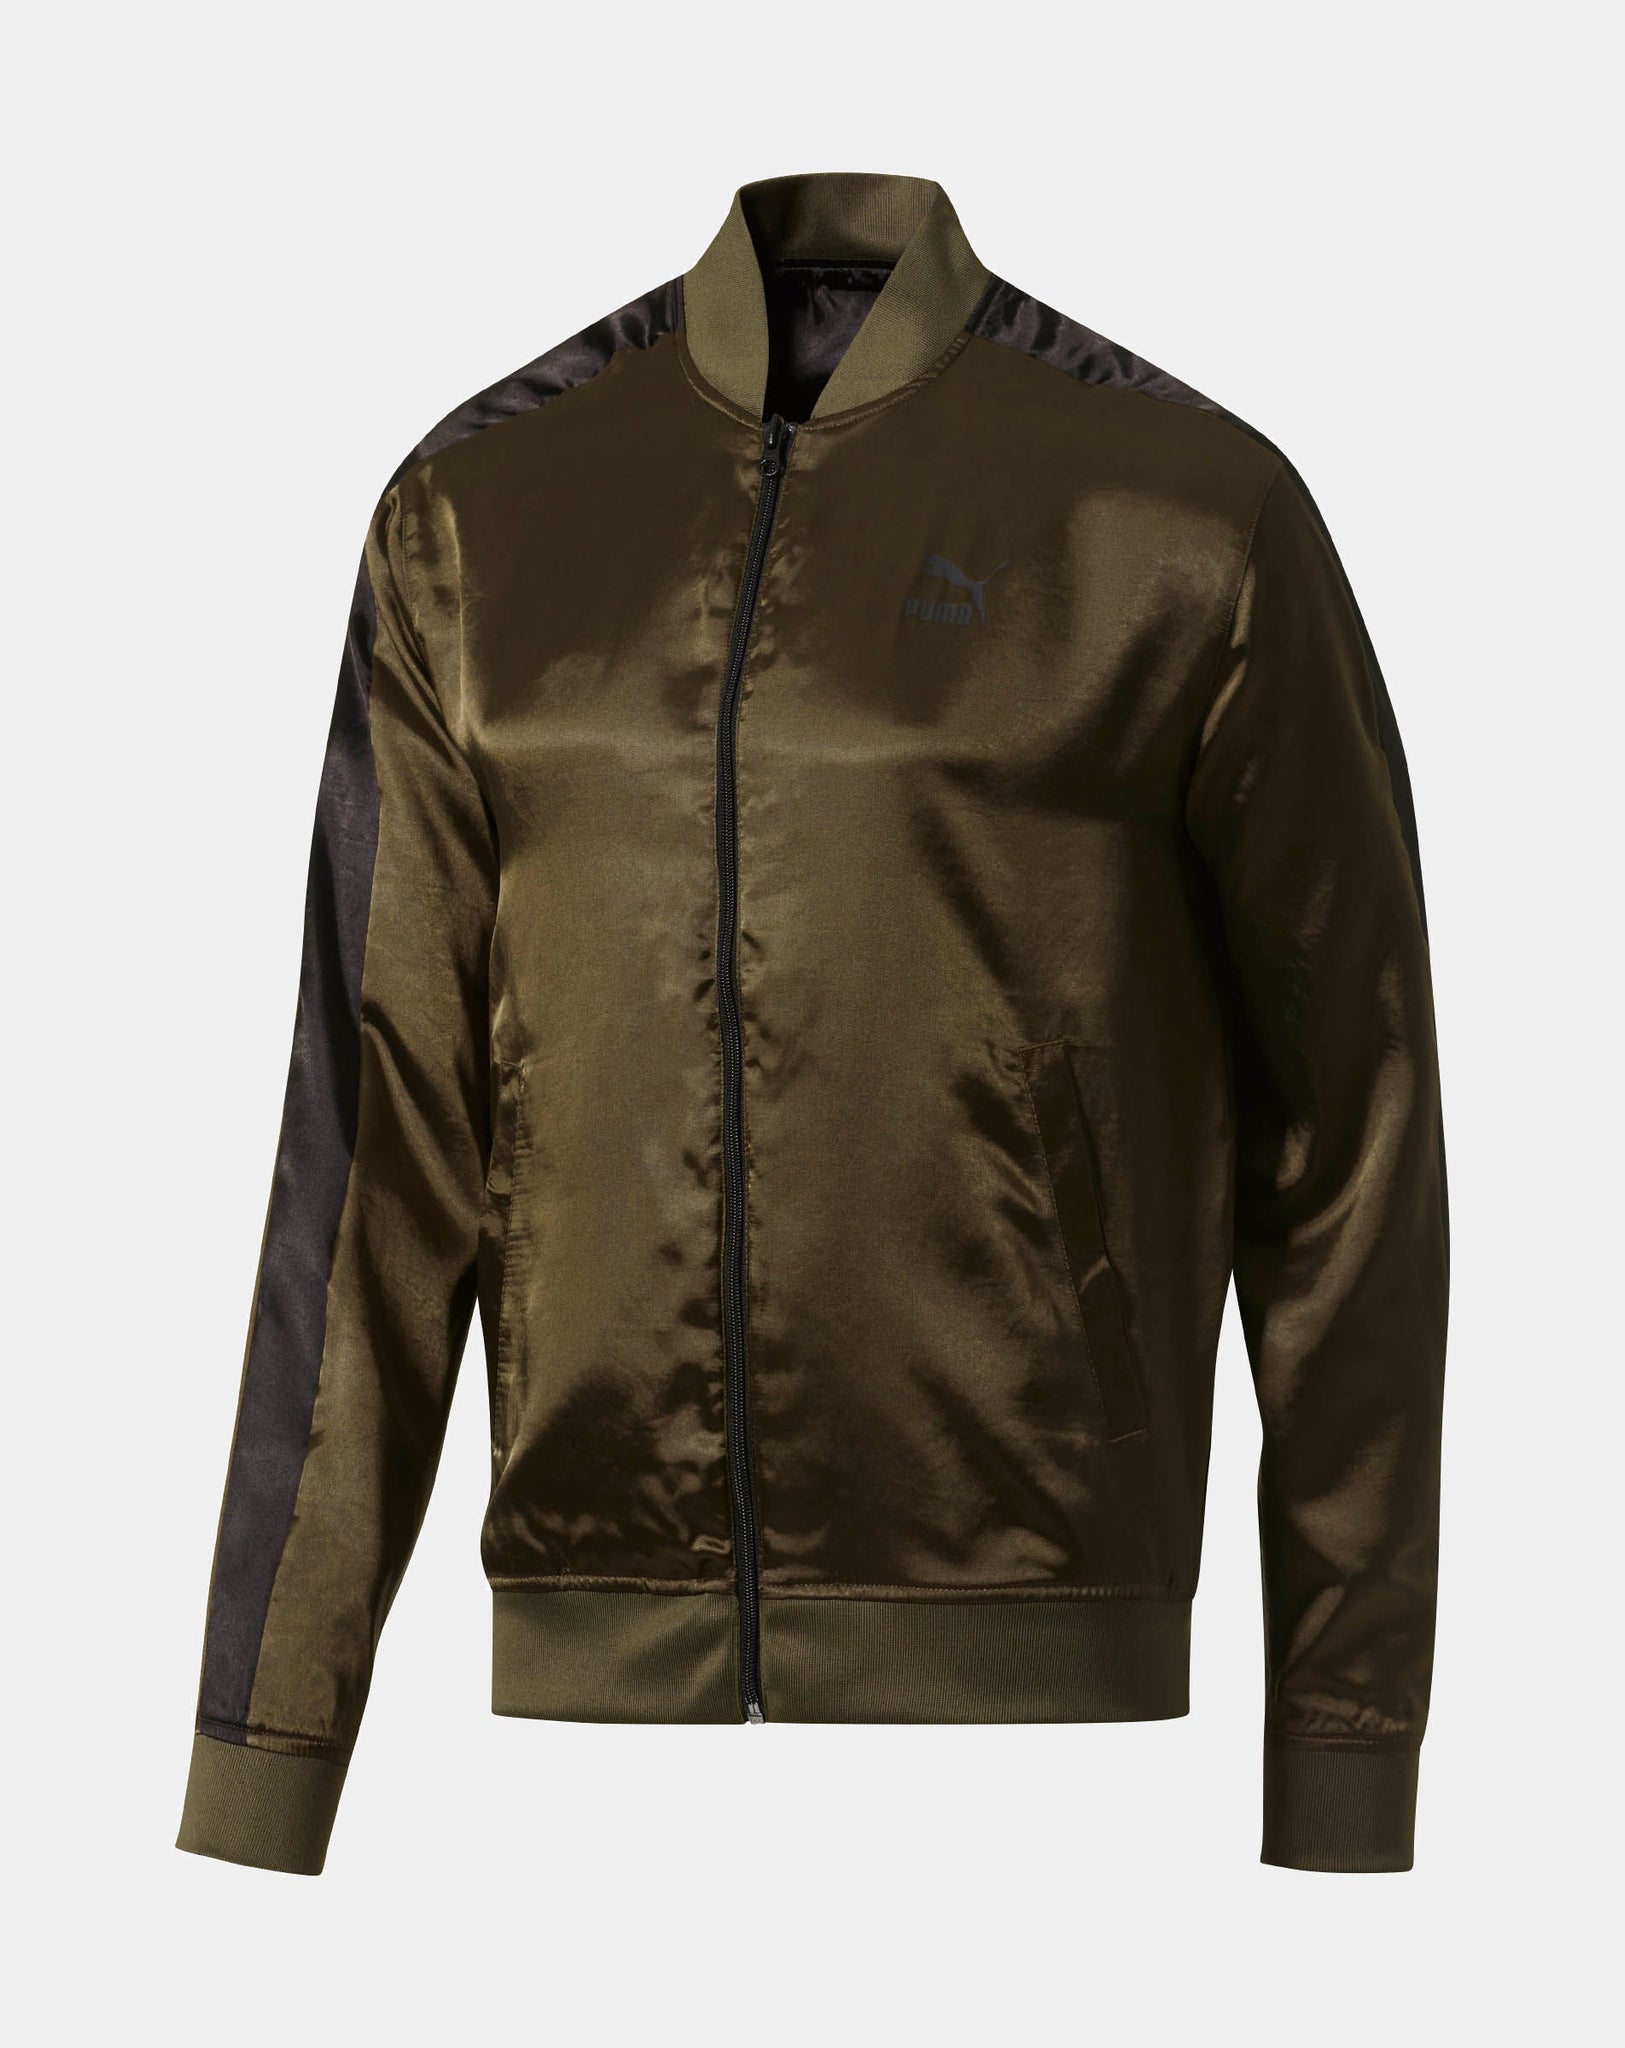 Puma Men's Olive Green Full Zip Fleece Track Jacket Size XL (850681) | eBay